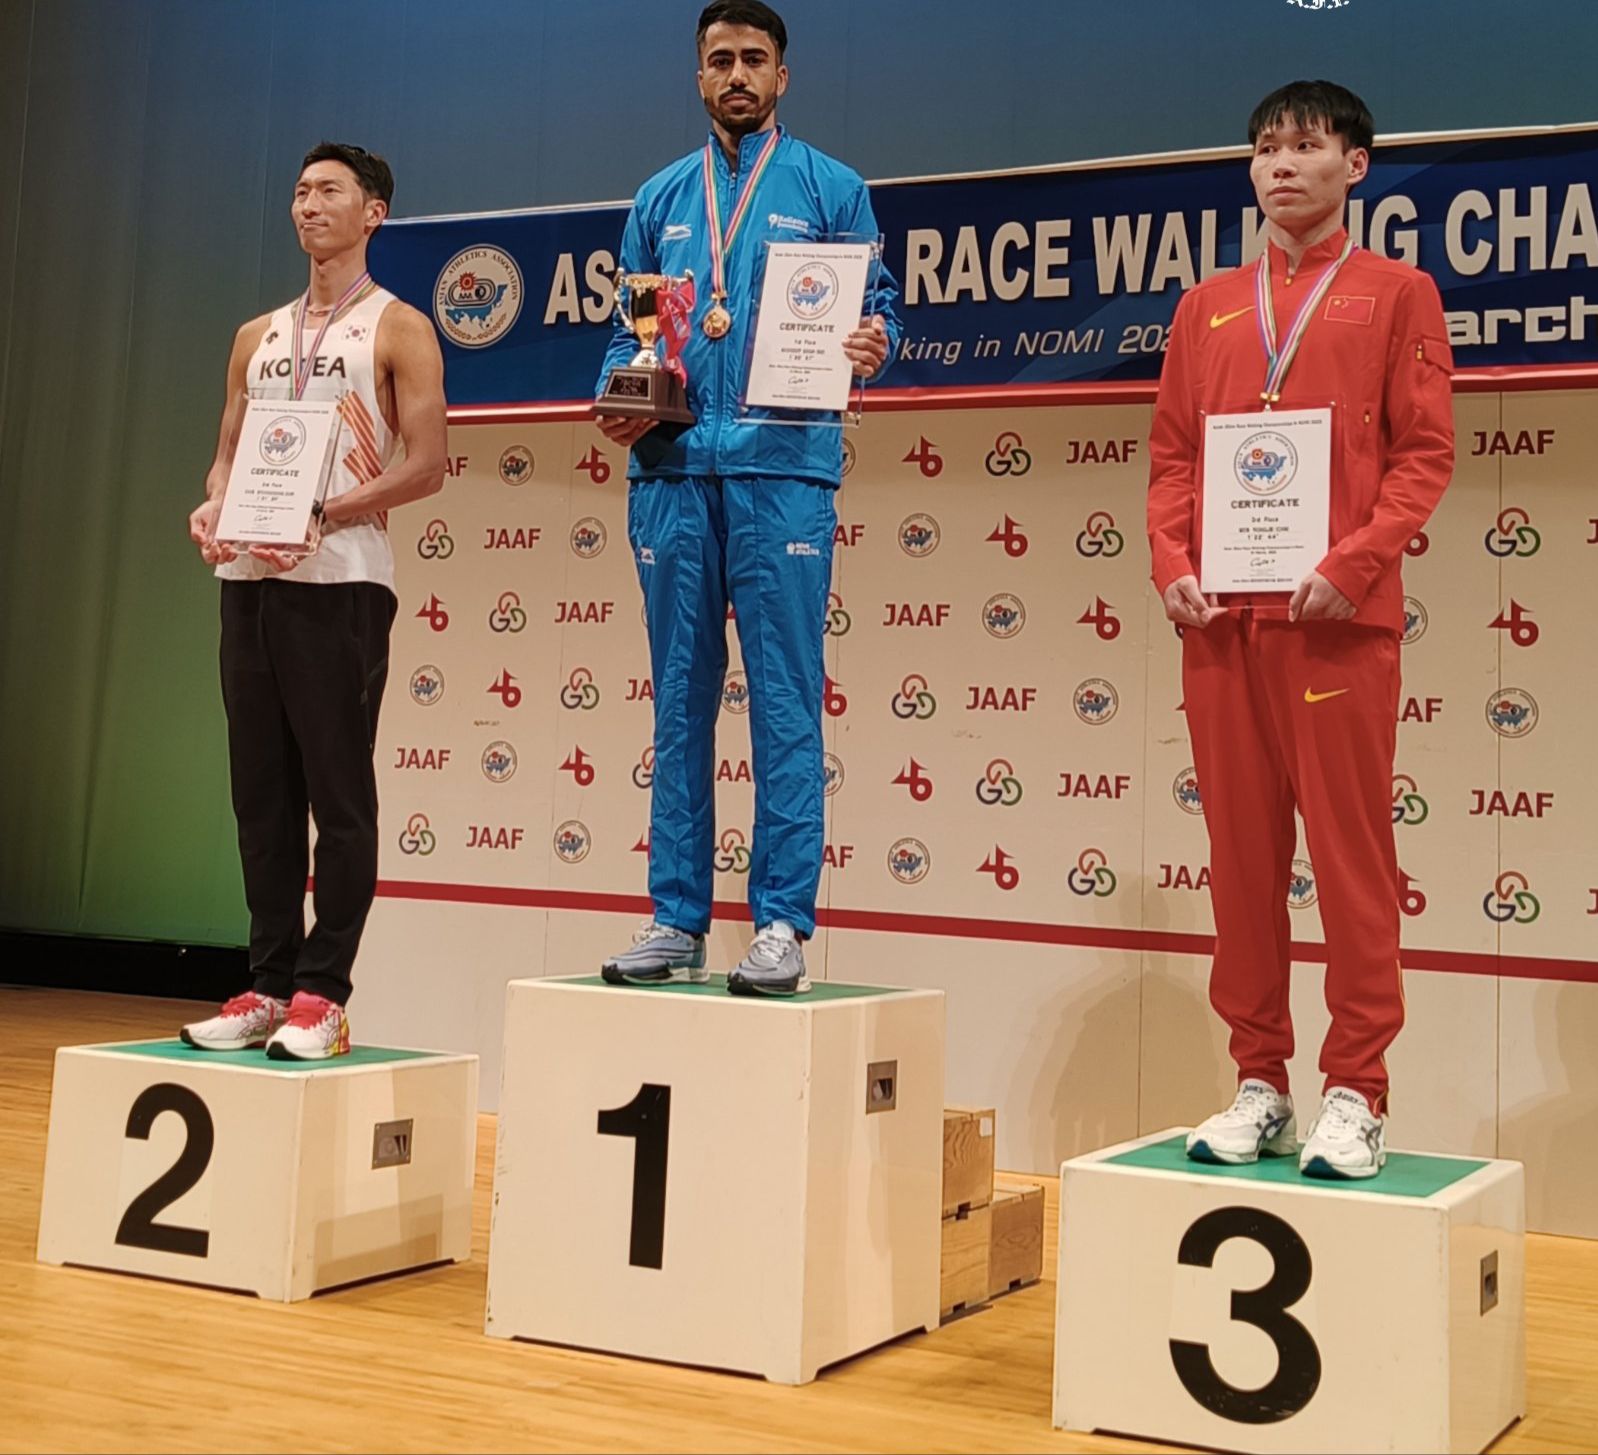 Athlete Akshdeep Singh wins Gold Medal in Asian Race Walking Championship